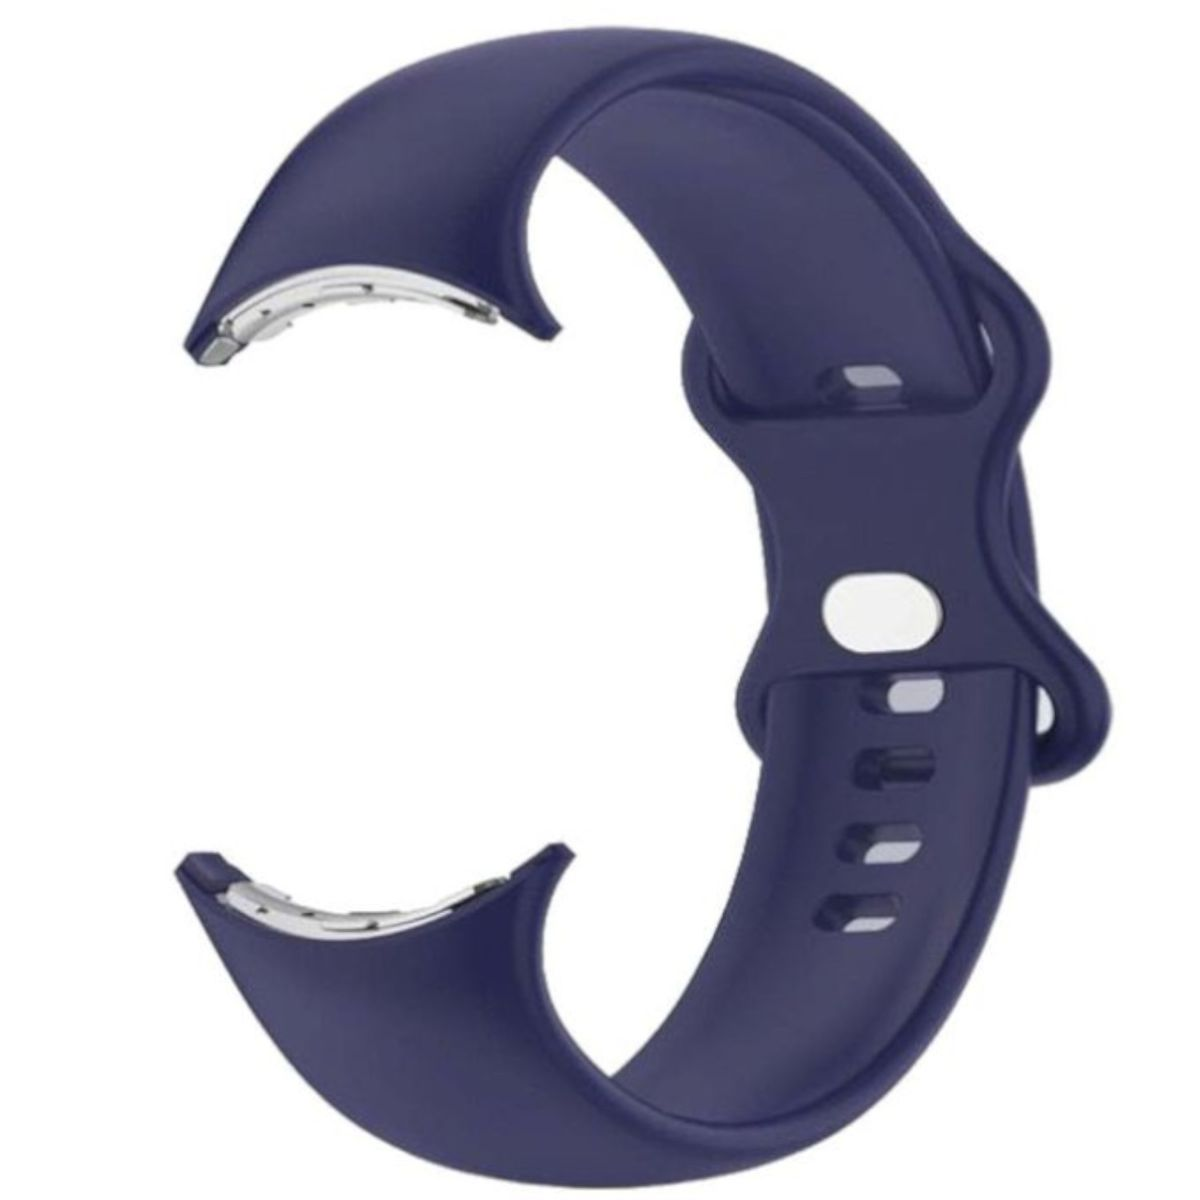 Design Pixel 2, Google, S, Kunststoff Blau Watch Silikon Sport Größe + 1 Band Ersatzarmband, WIGENTO /